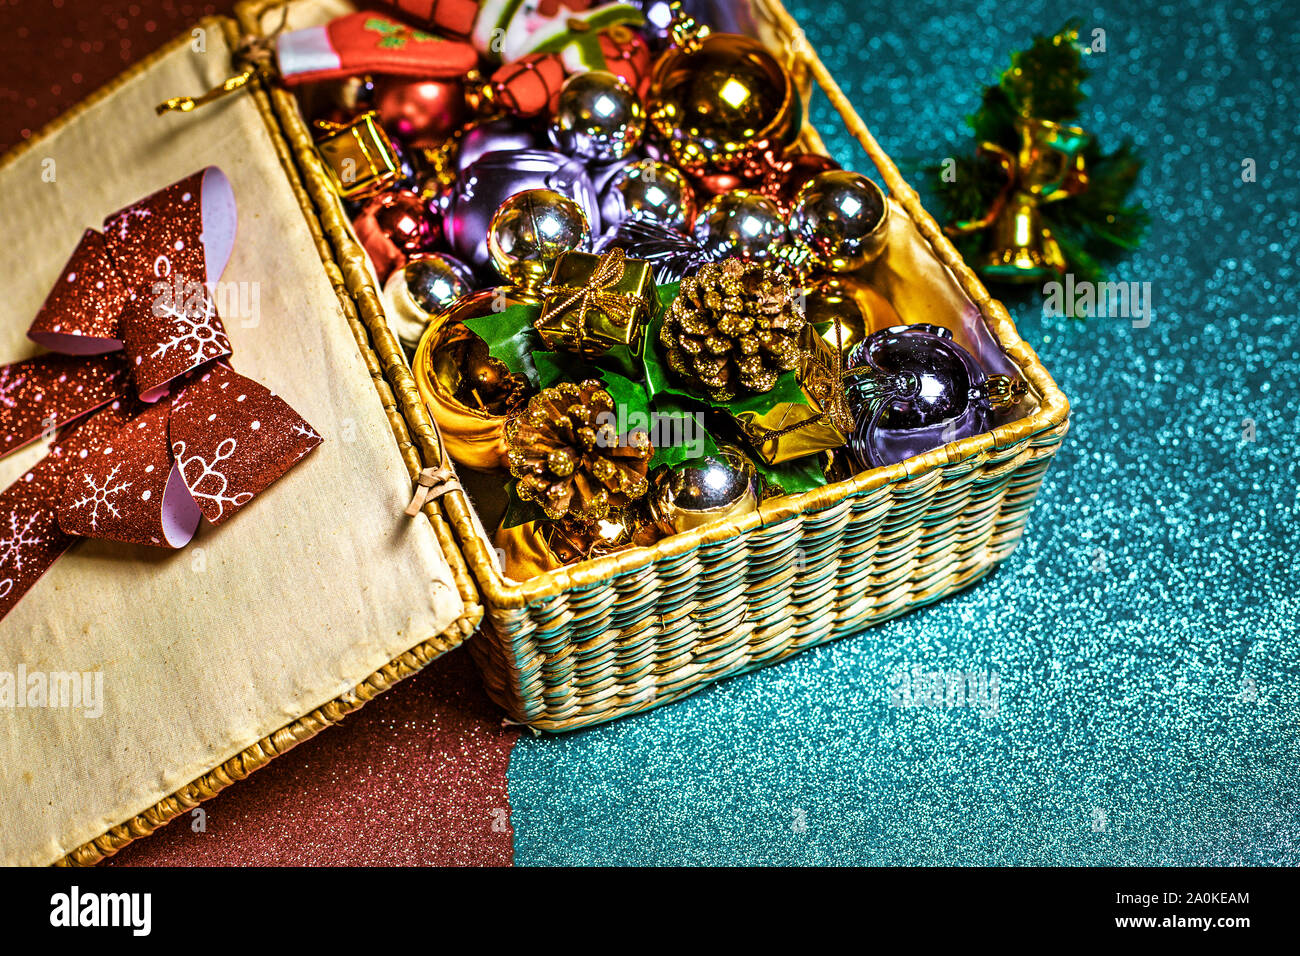 wicker box on a shiny floor full of Christmas decorations Stock Photo